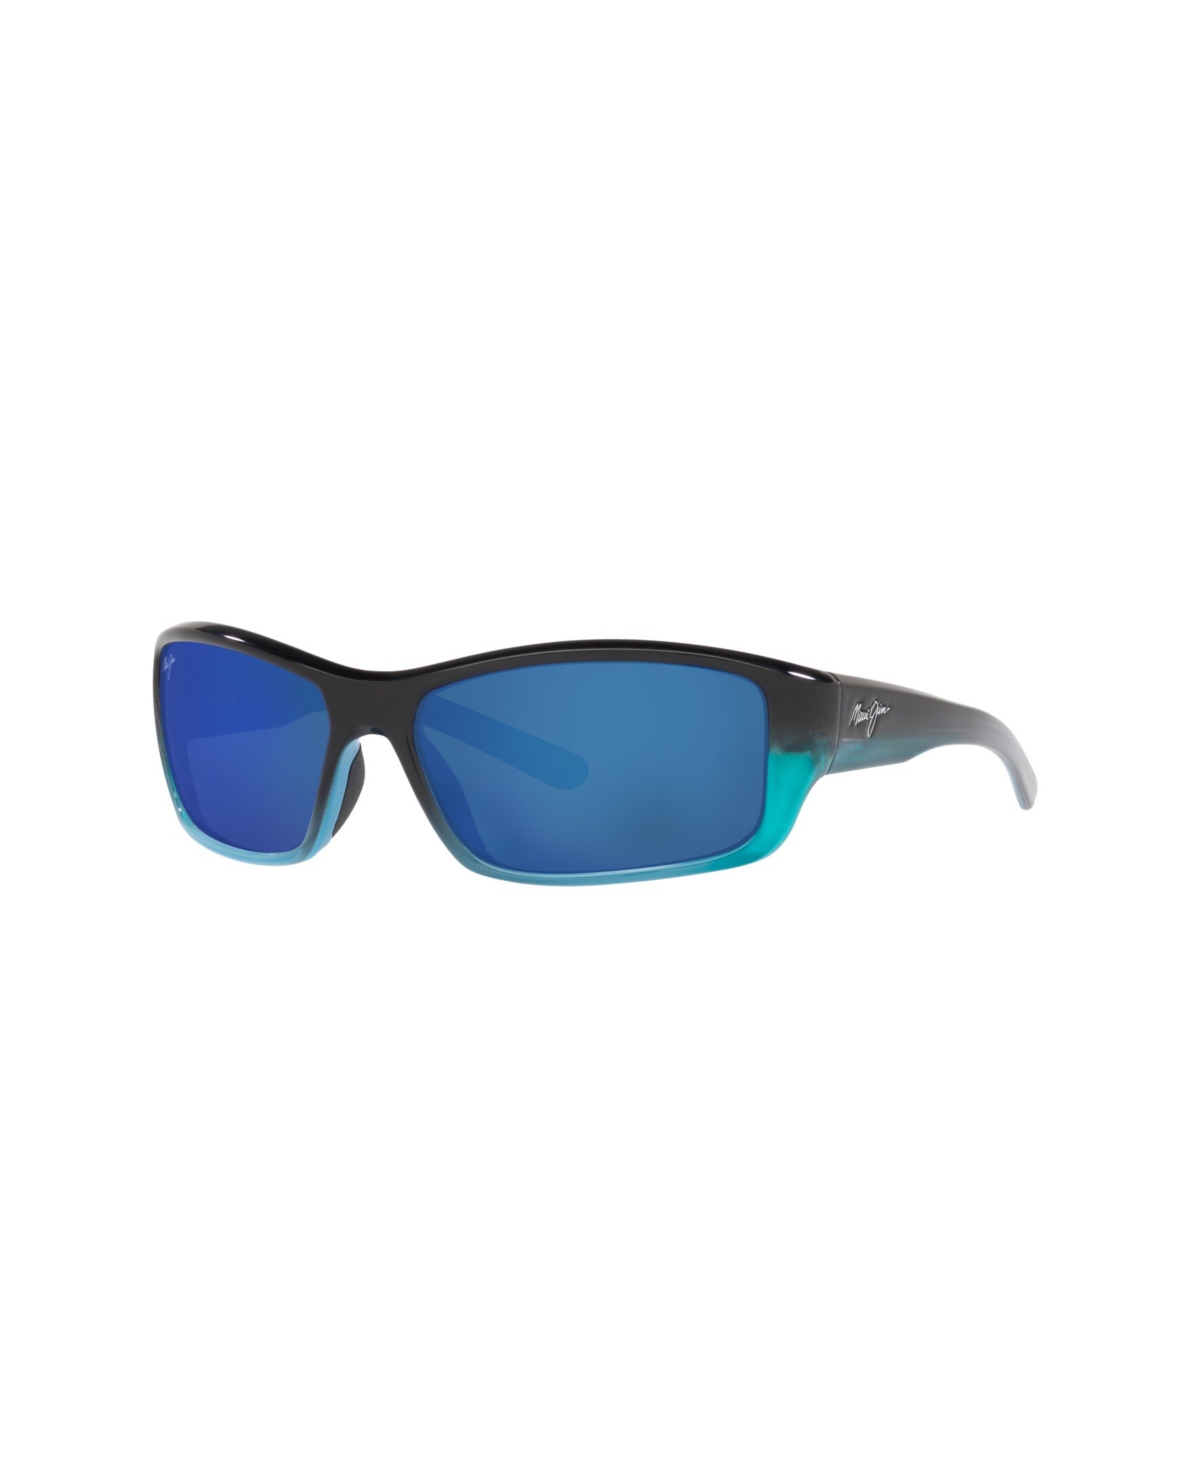 Shop Maui Jim Unisex Polarized Sunglasses, Barrier Reef Mj000636 In Blue Turquoise